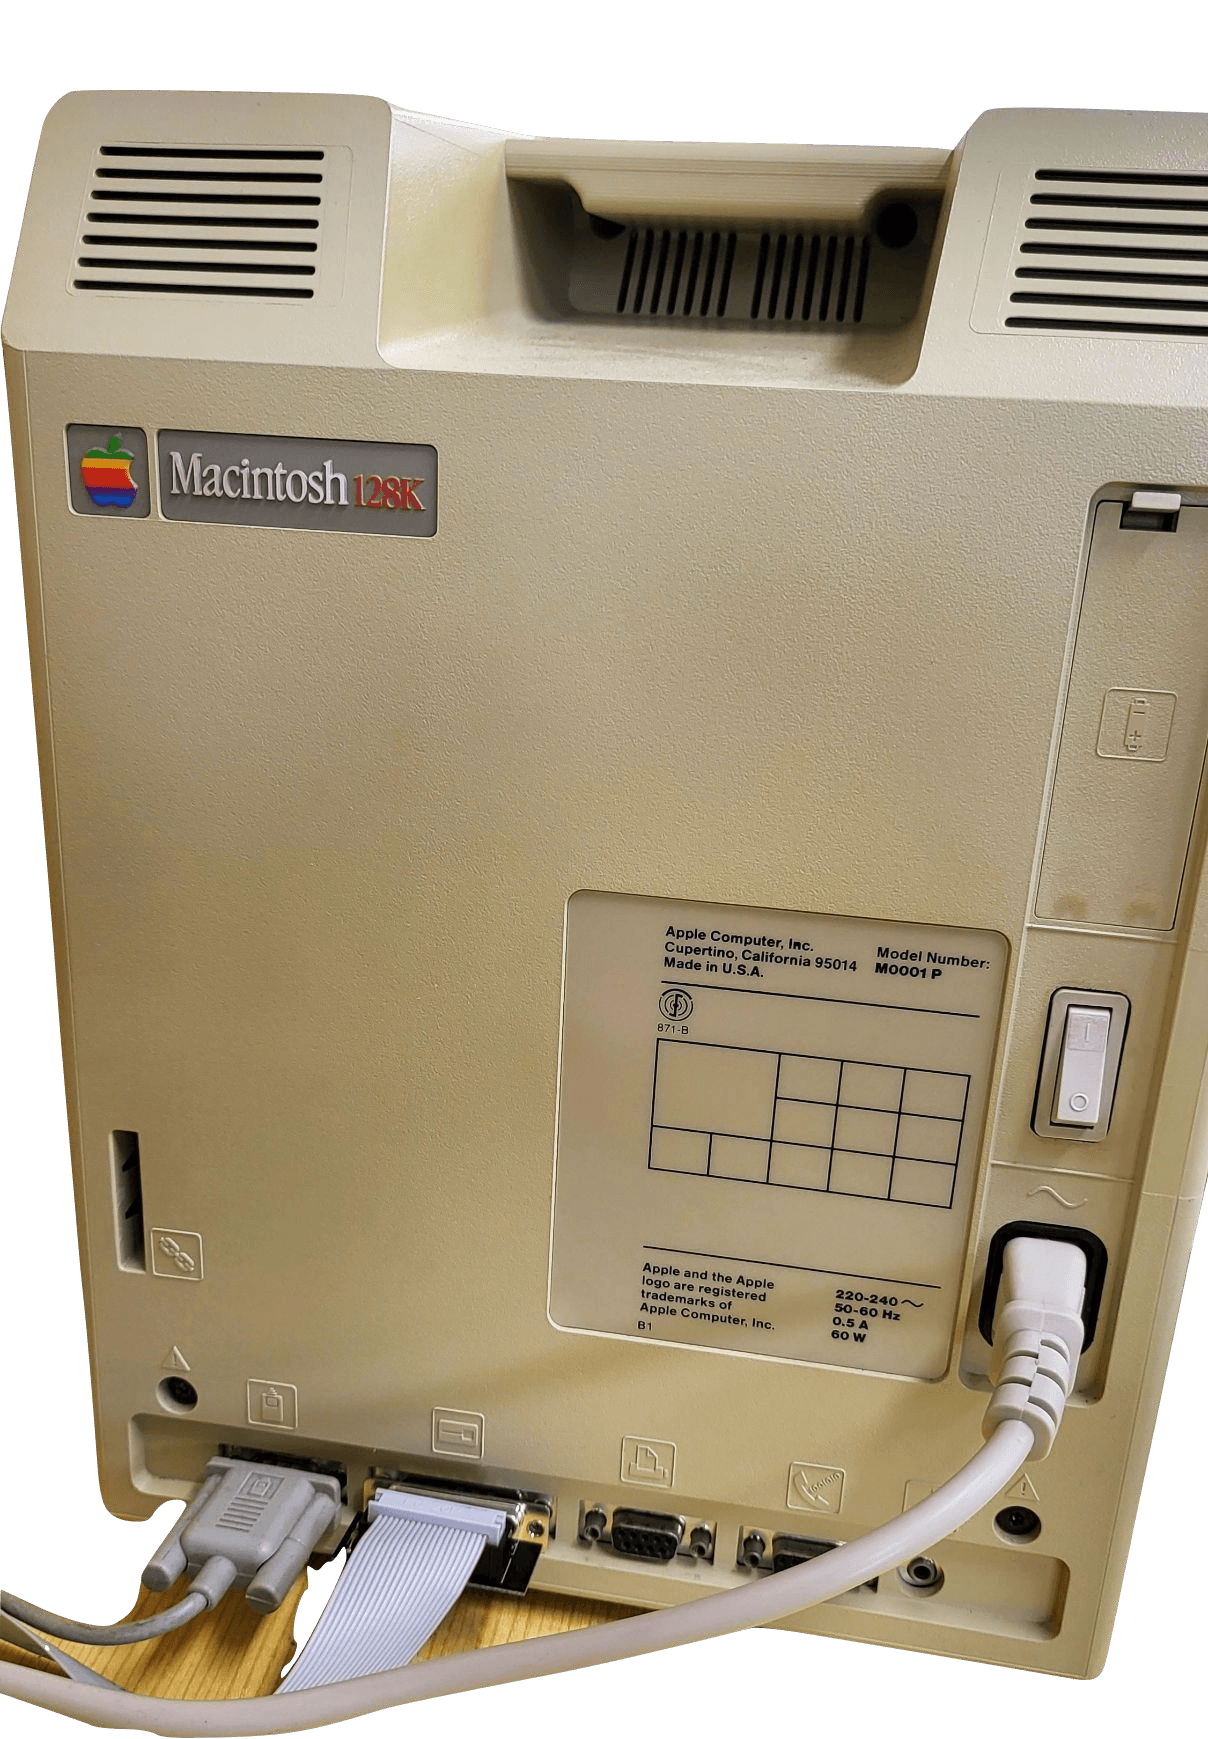 HomeComputerMuseum - Macintosh 128K